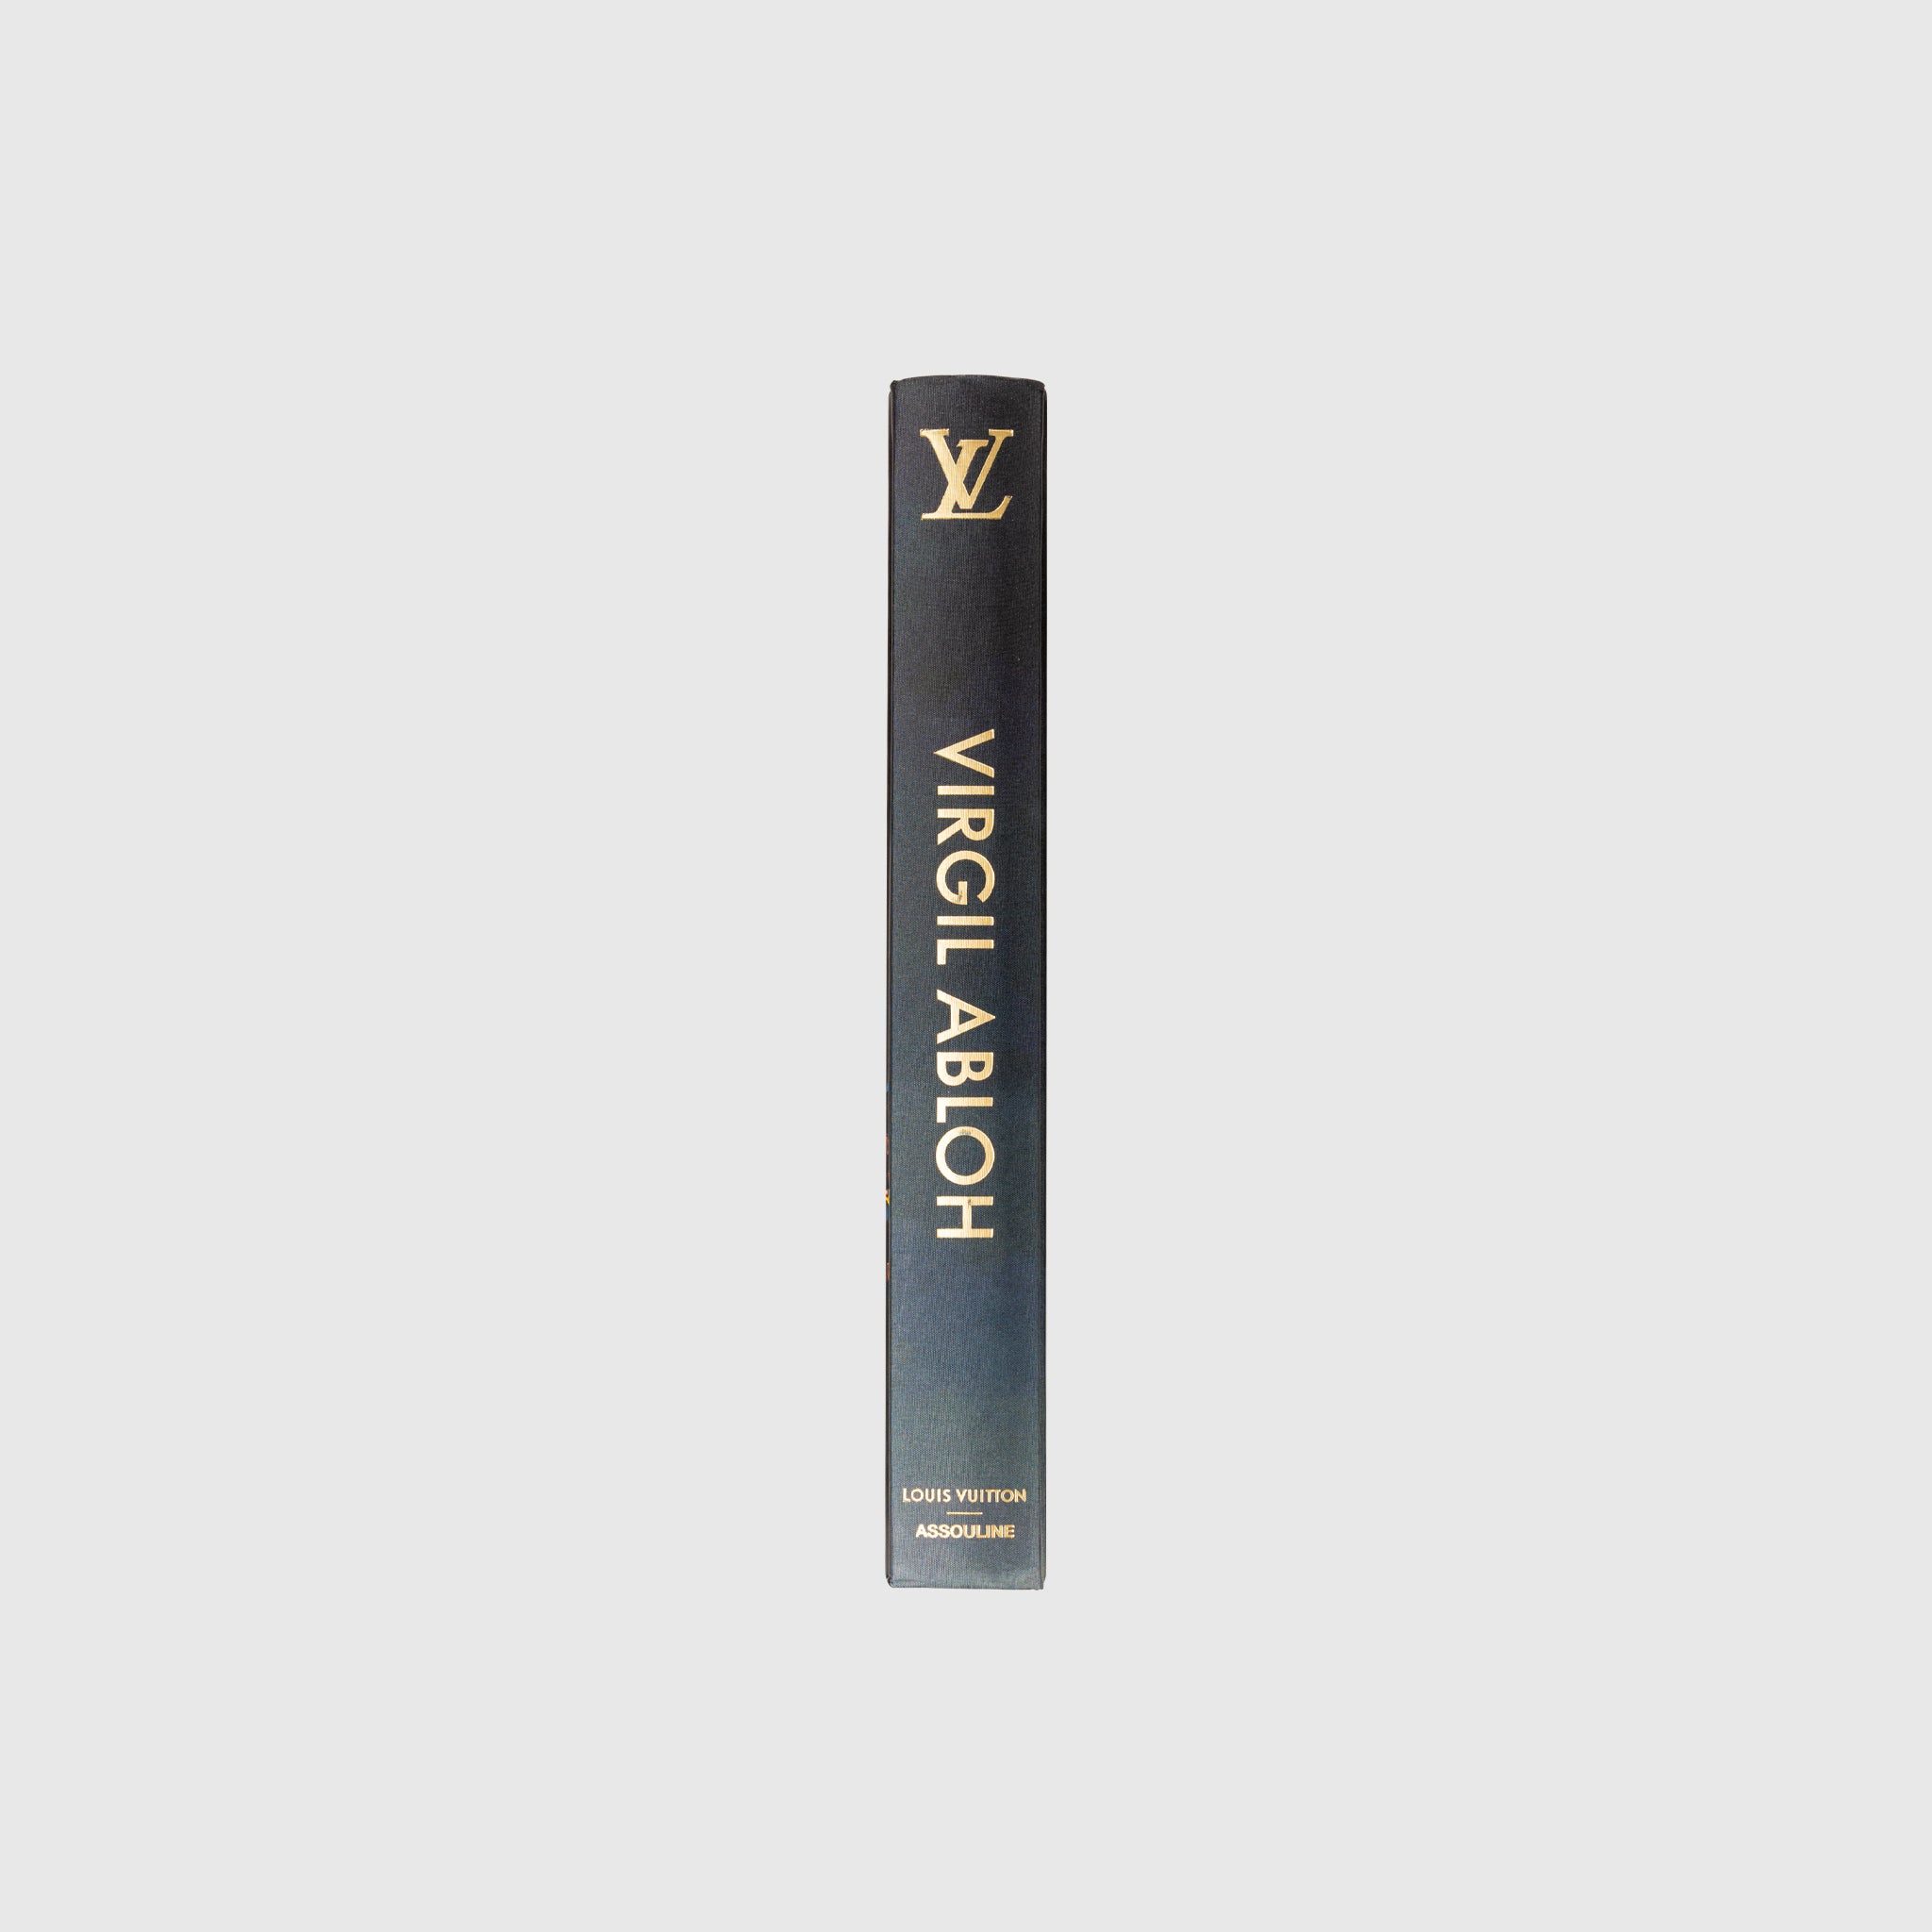 LOUIS VUITTON: VIRGIL ABLOH (CARTOON COVER) – PACKER SHOES